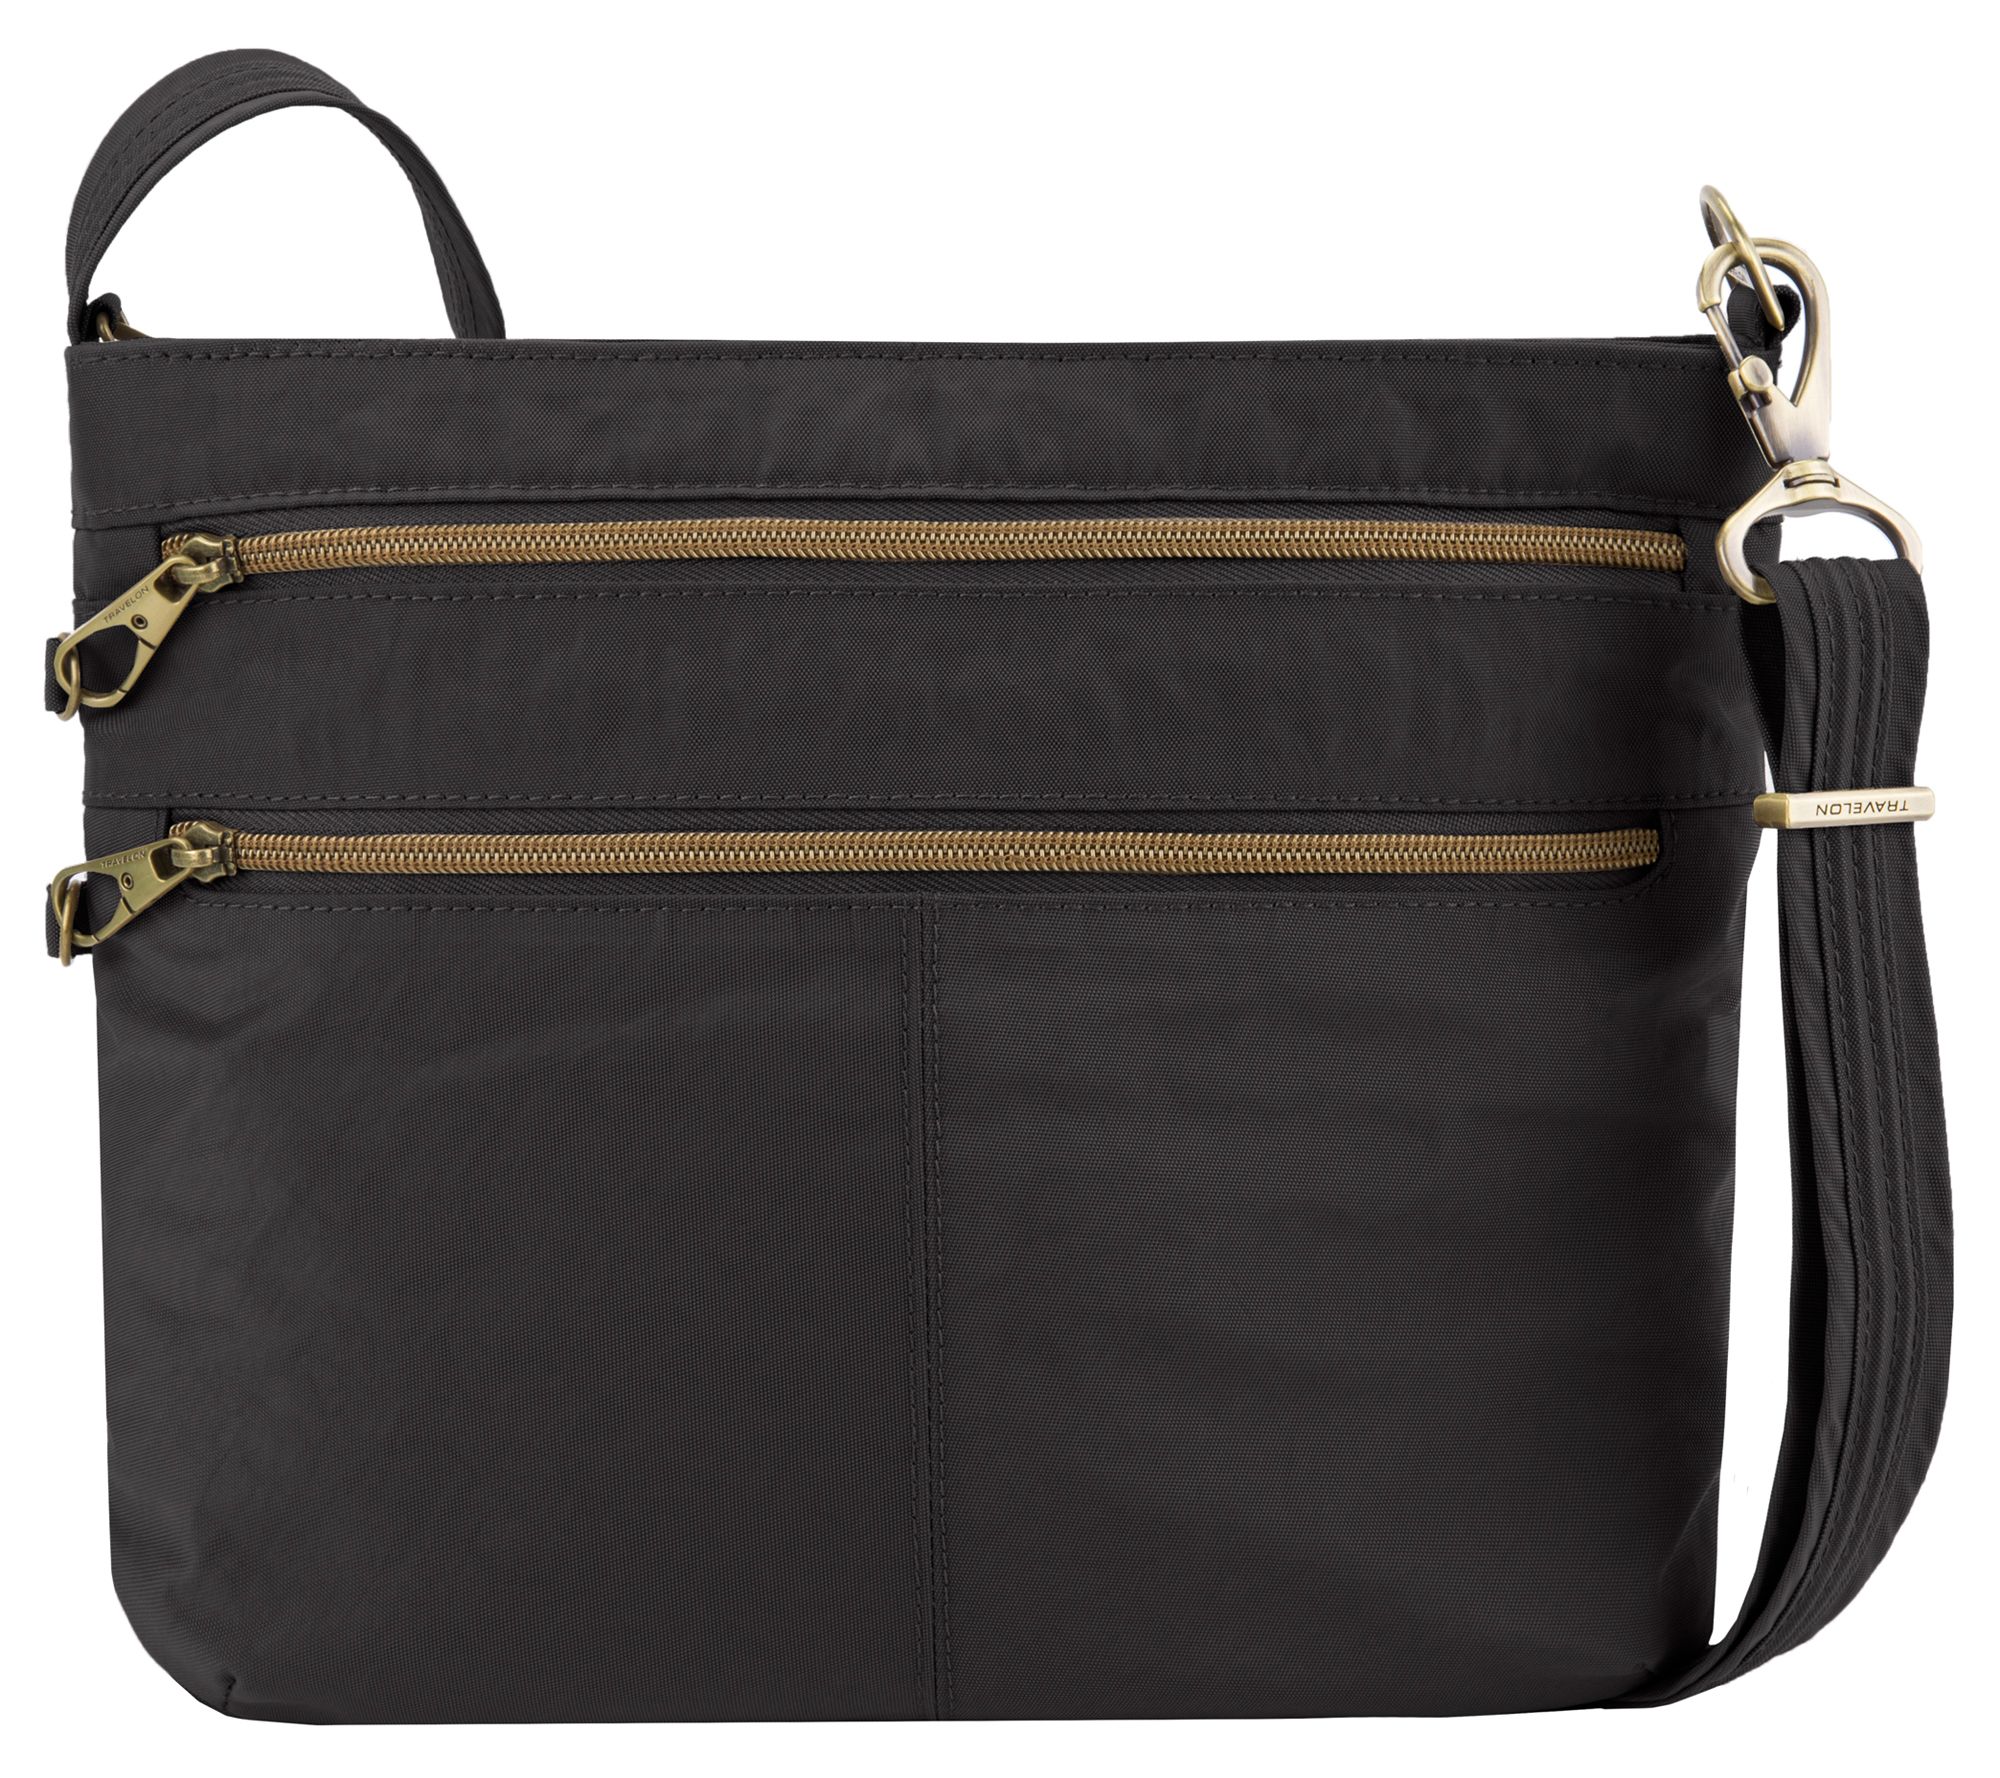 women's travel handbags anti theft